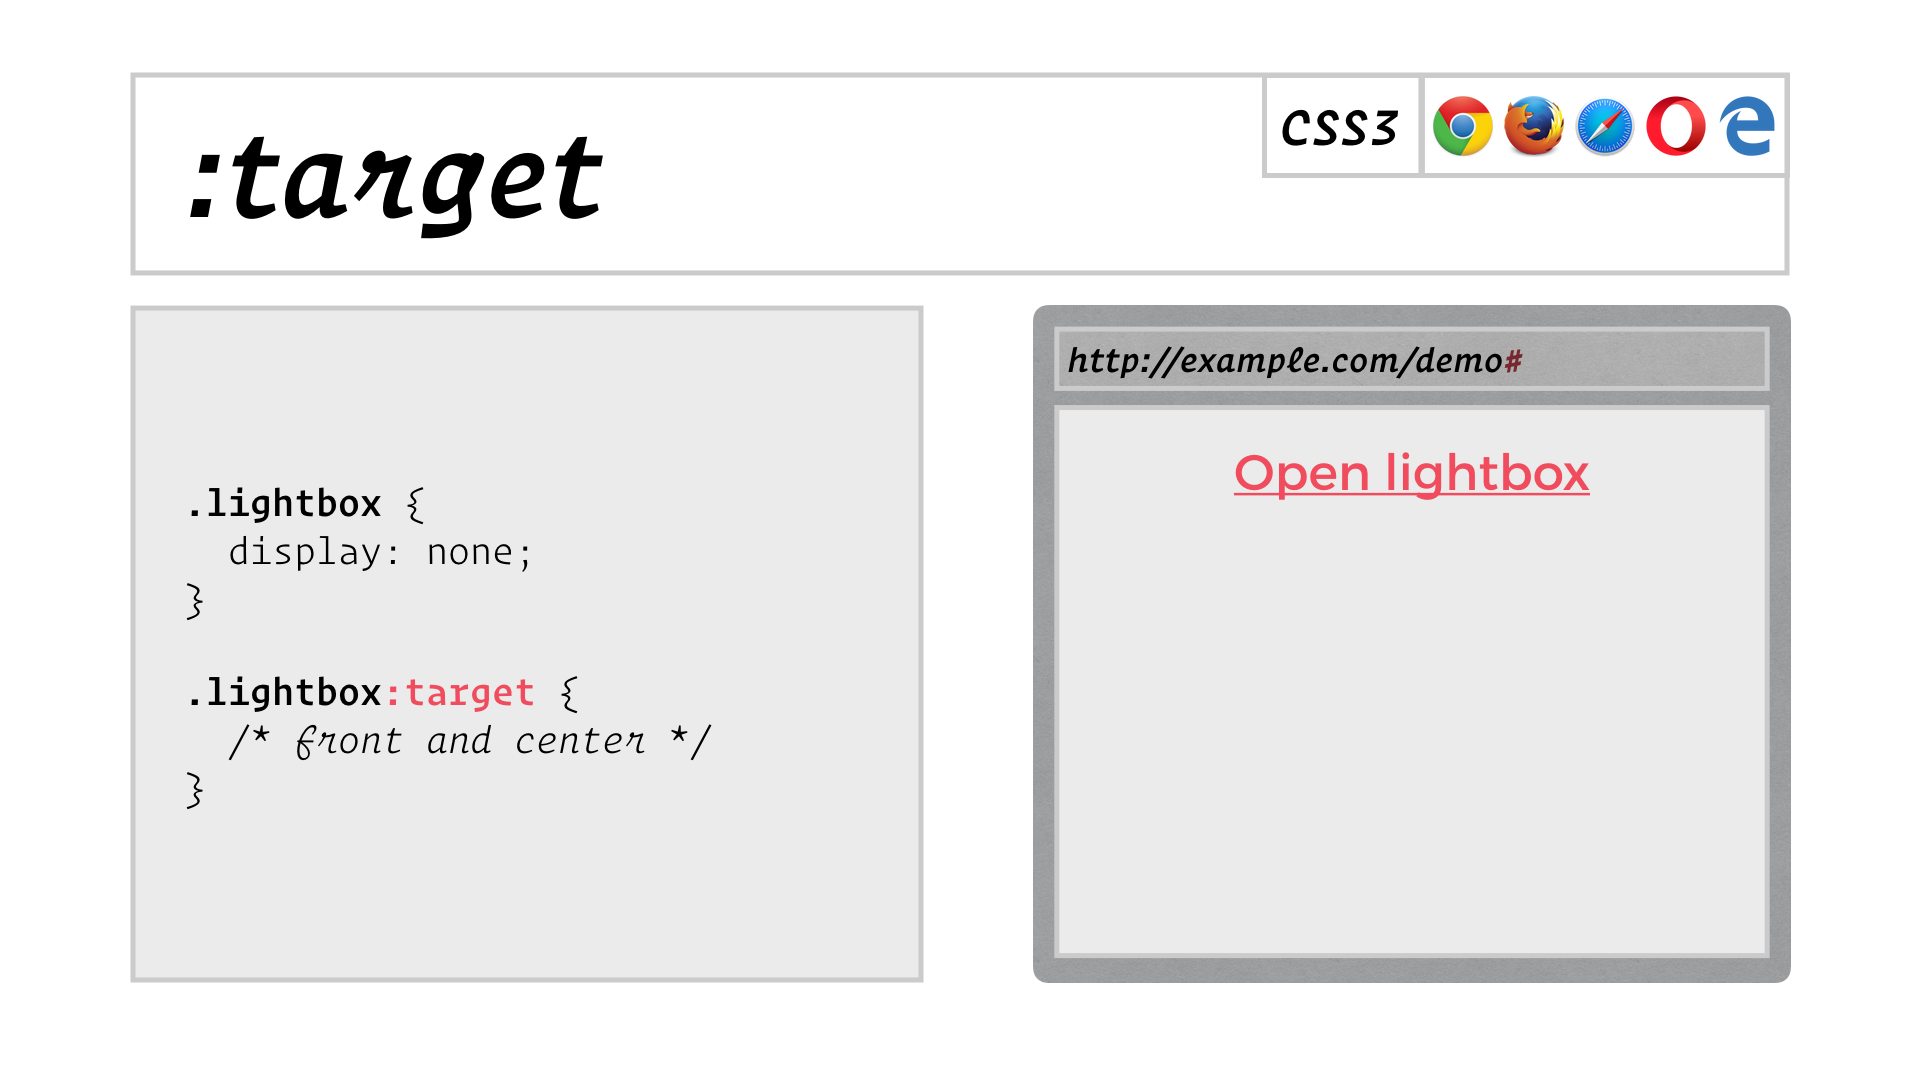 slide: the URL has no fragment identifier, so the lightbox is hidden